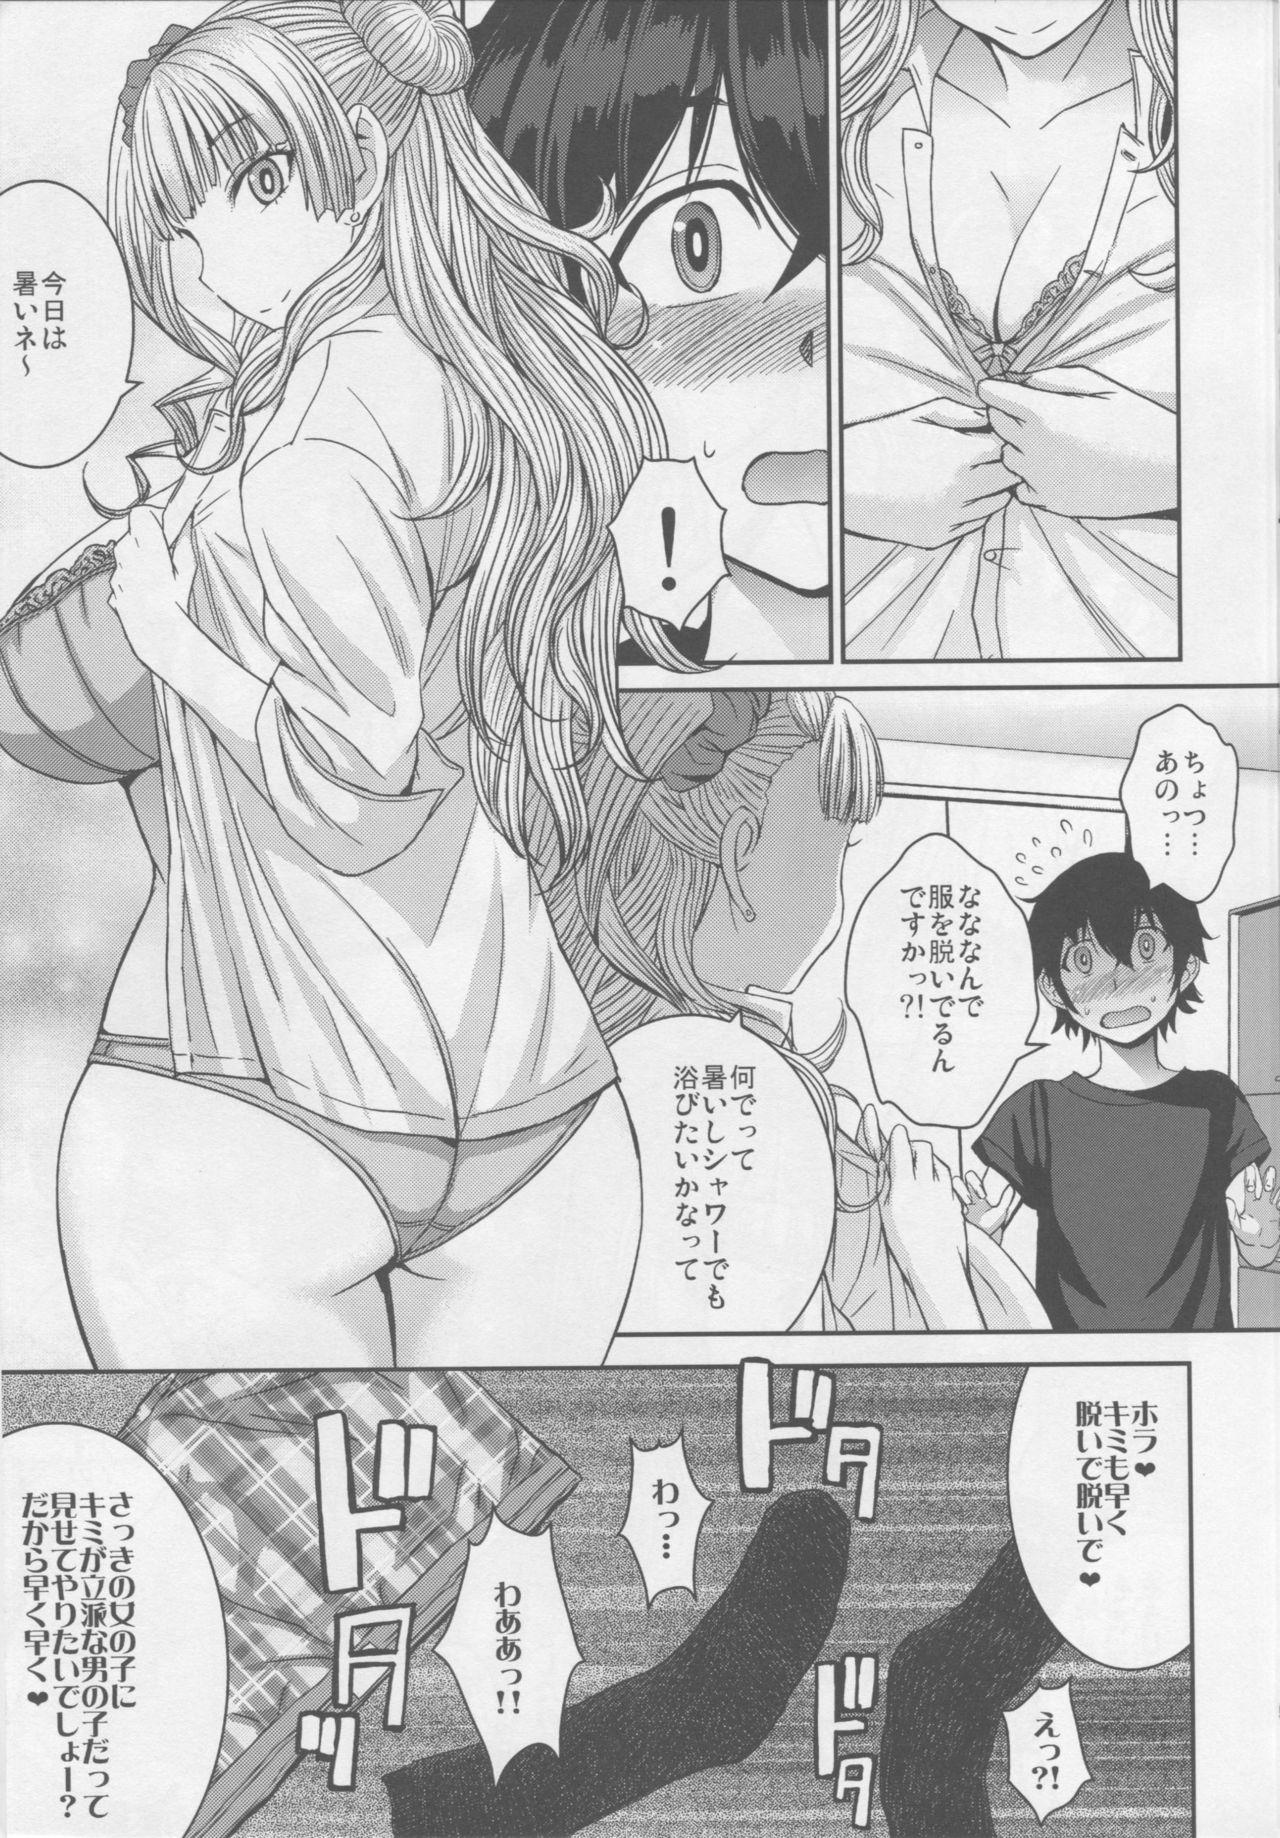 Abuse Boy Meets Gal - Oshiete galko-chan Handjob - Page 6